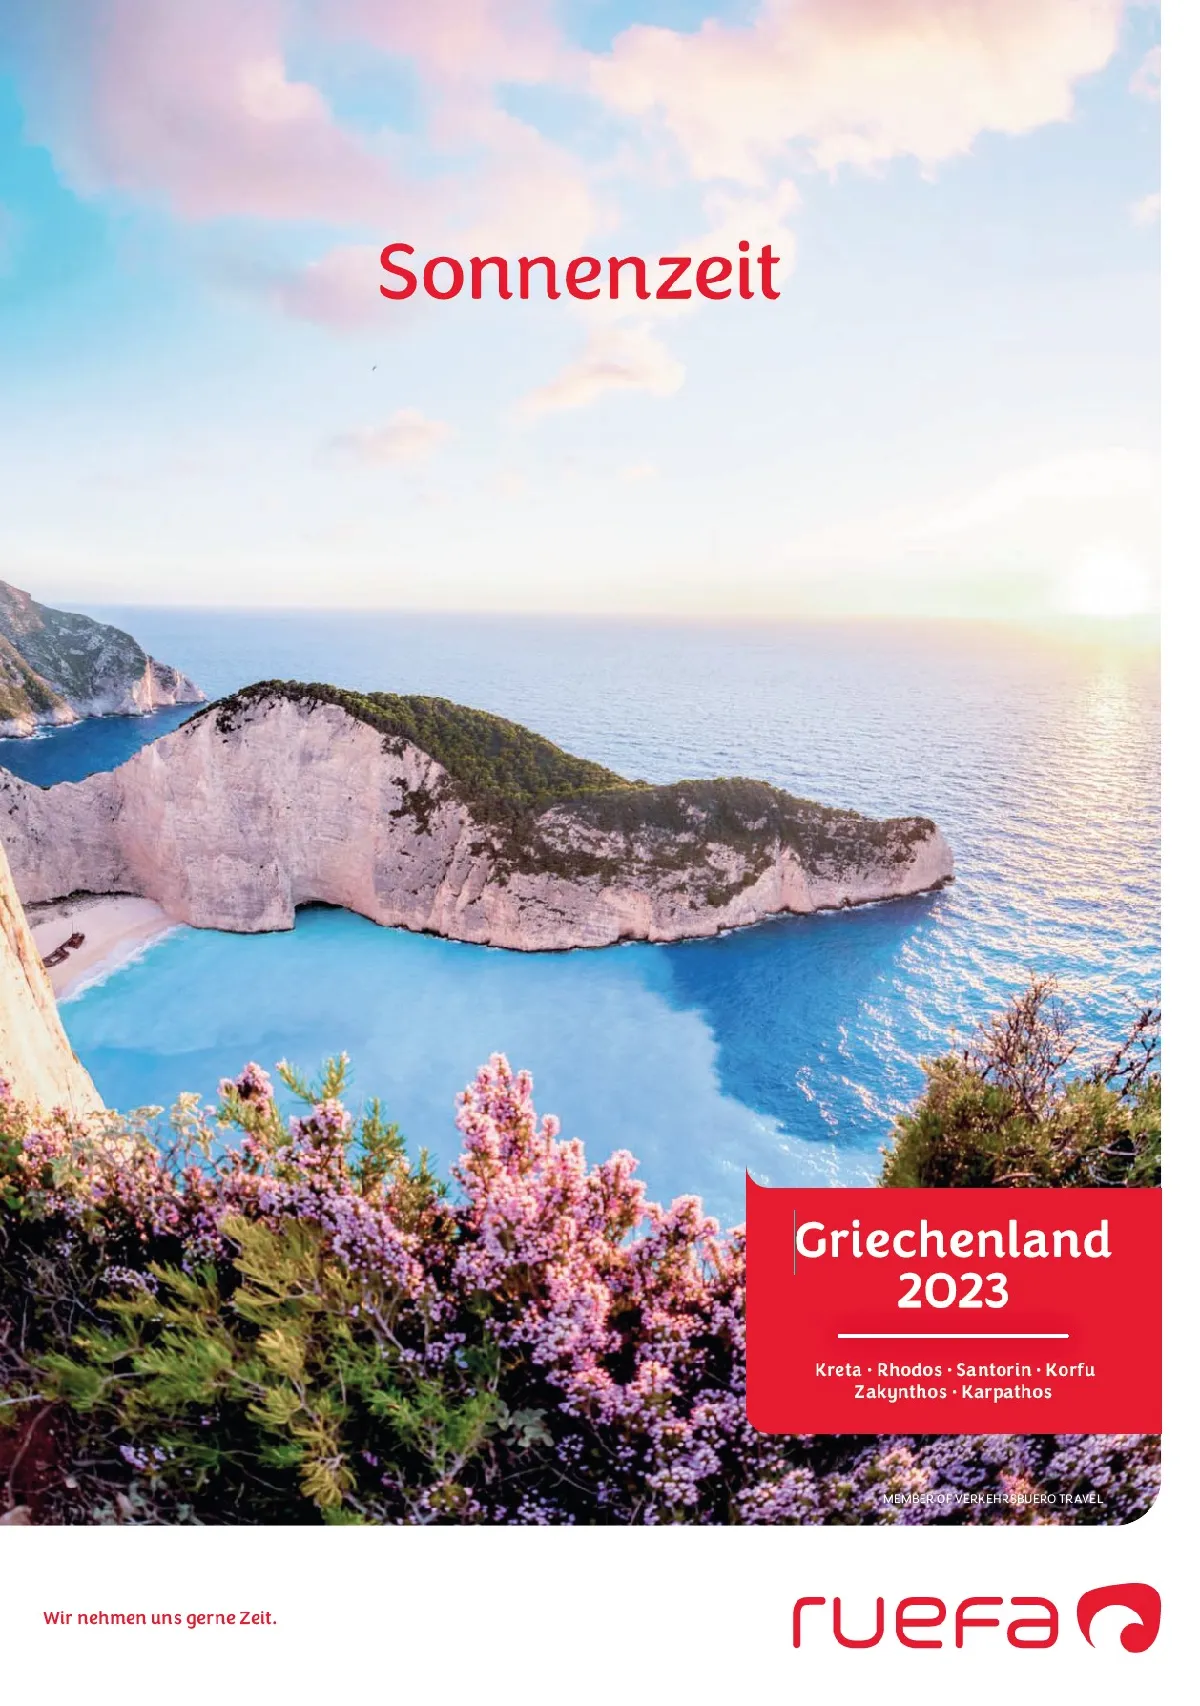 Sonnenzeit 2023 catalogue cover